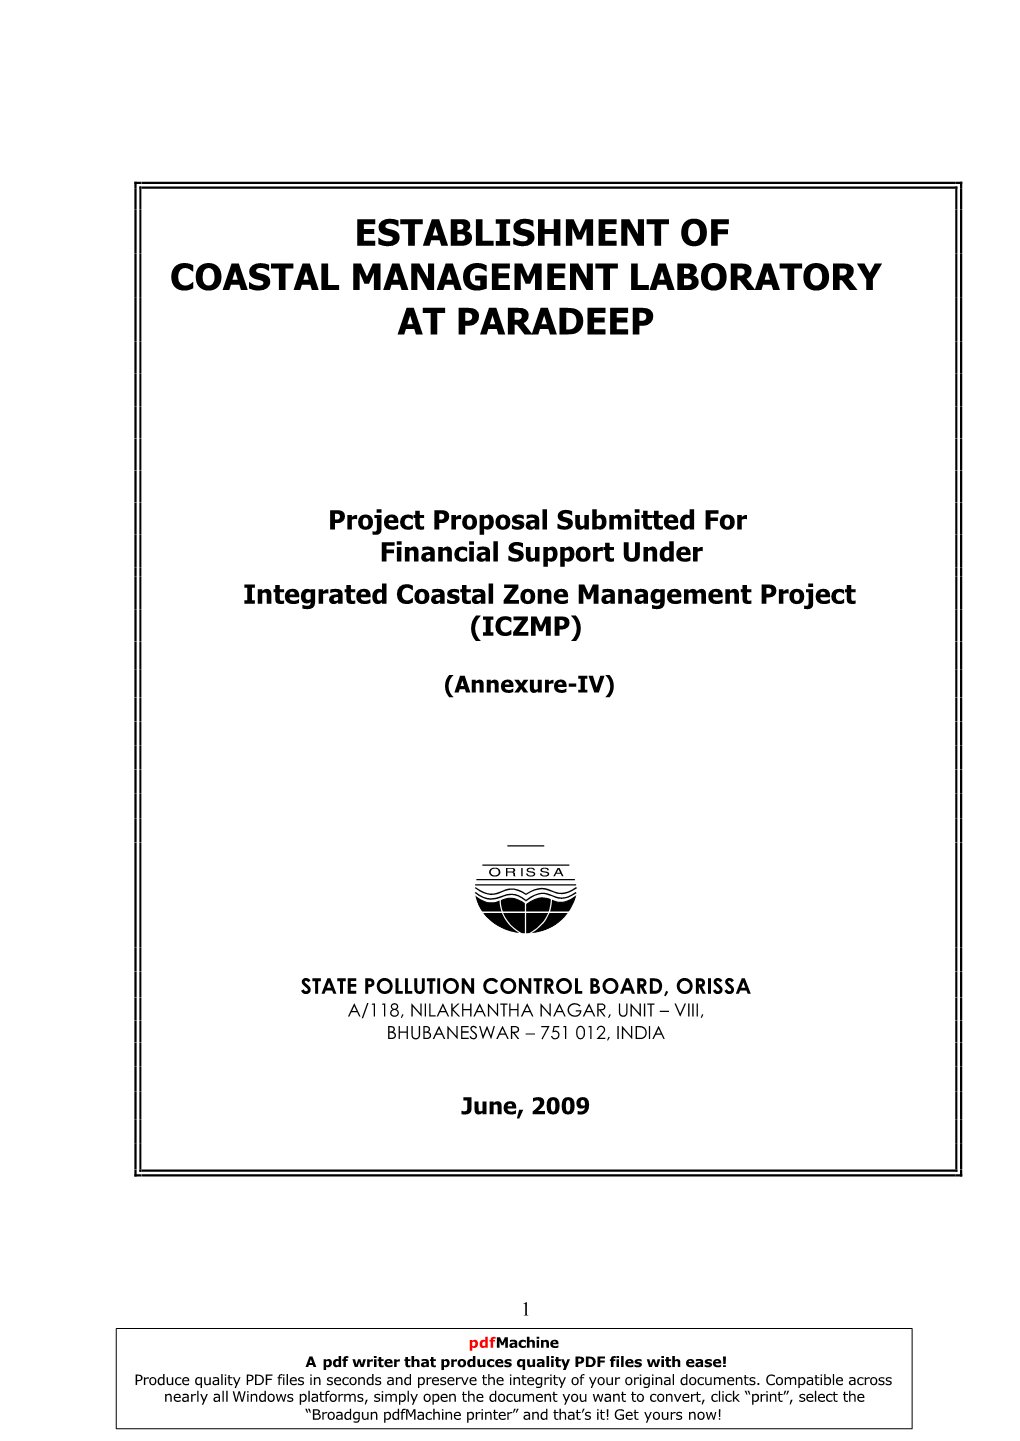 Establishment of Coastal Management Laboratory at Paradeep